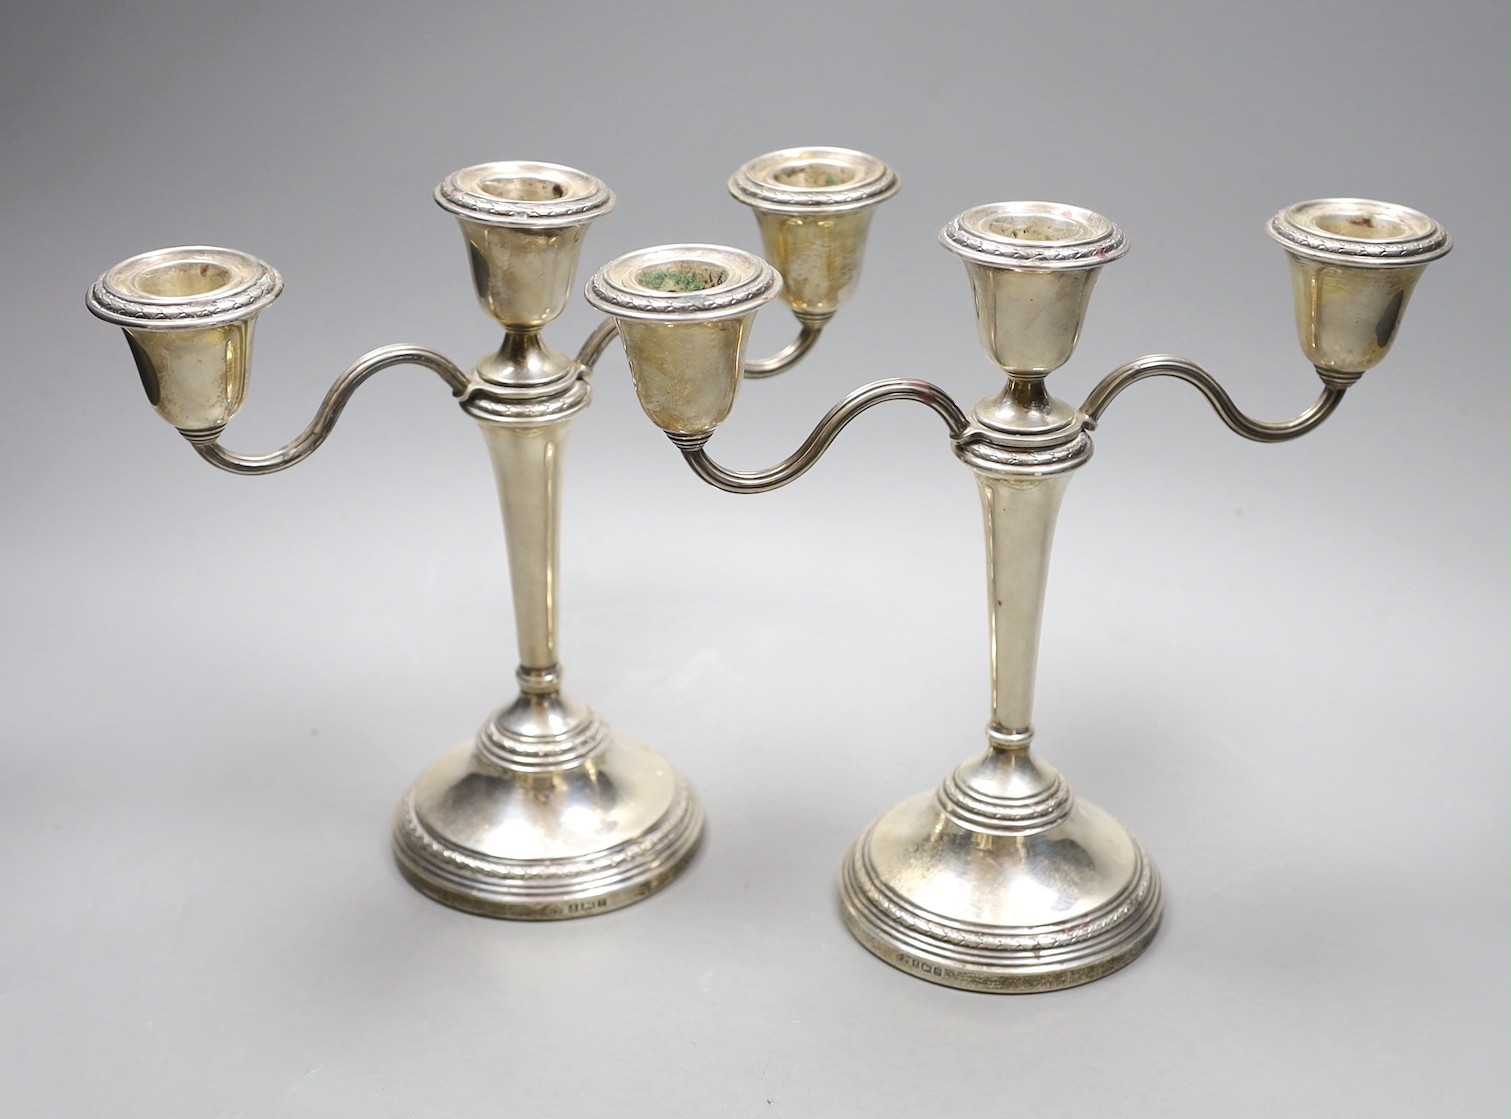 A pair of Elizabeth II silver candelabra, with loaded bases, makers Elkington & Co, Birmingham 1967, height 21cm